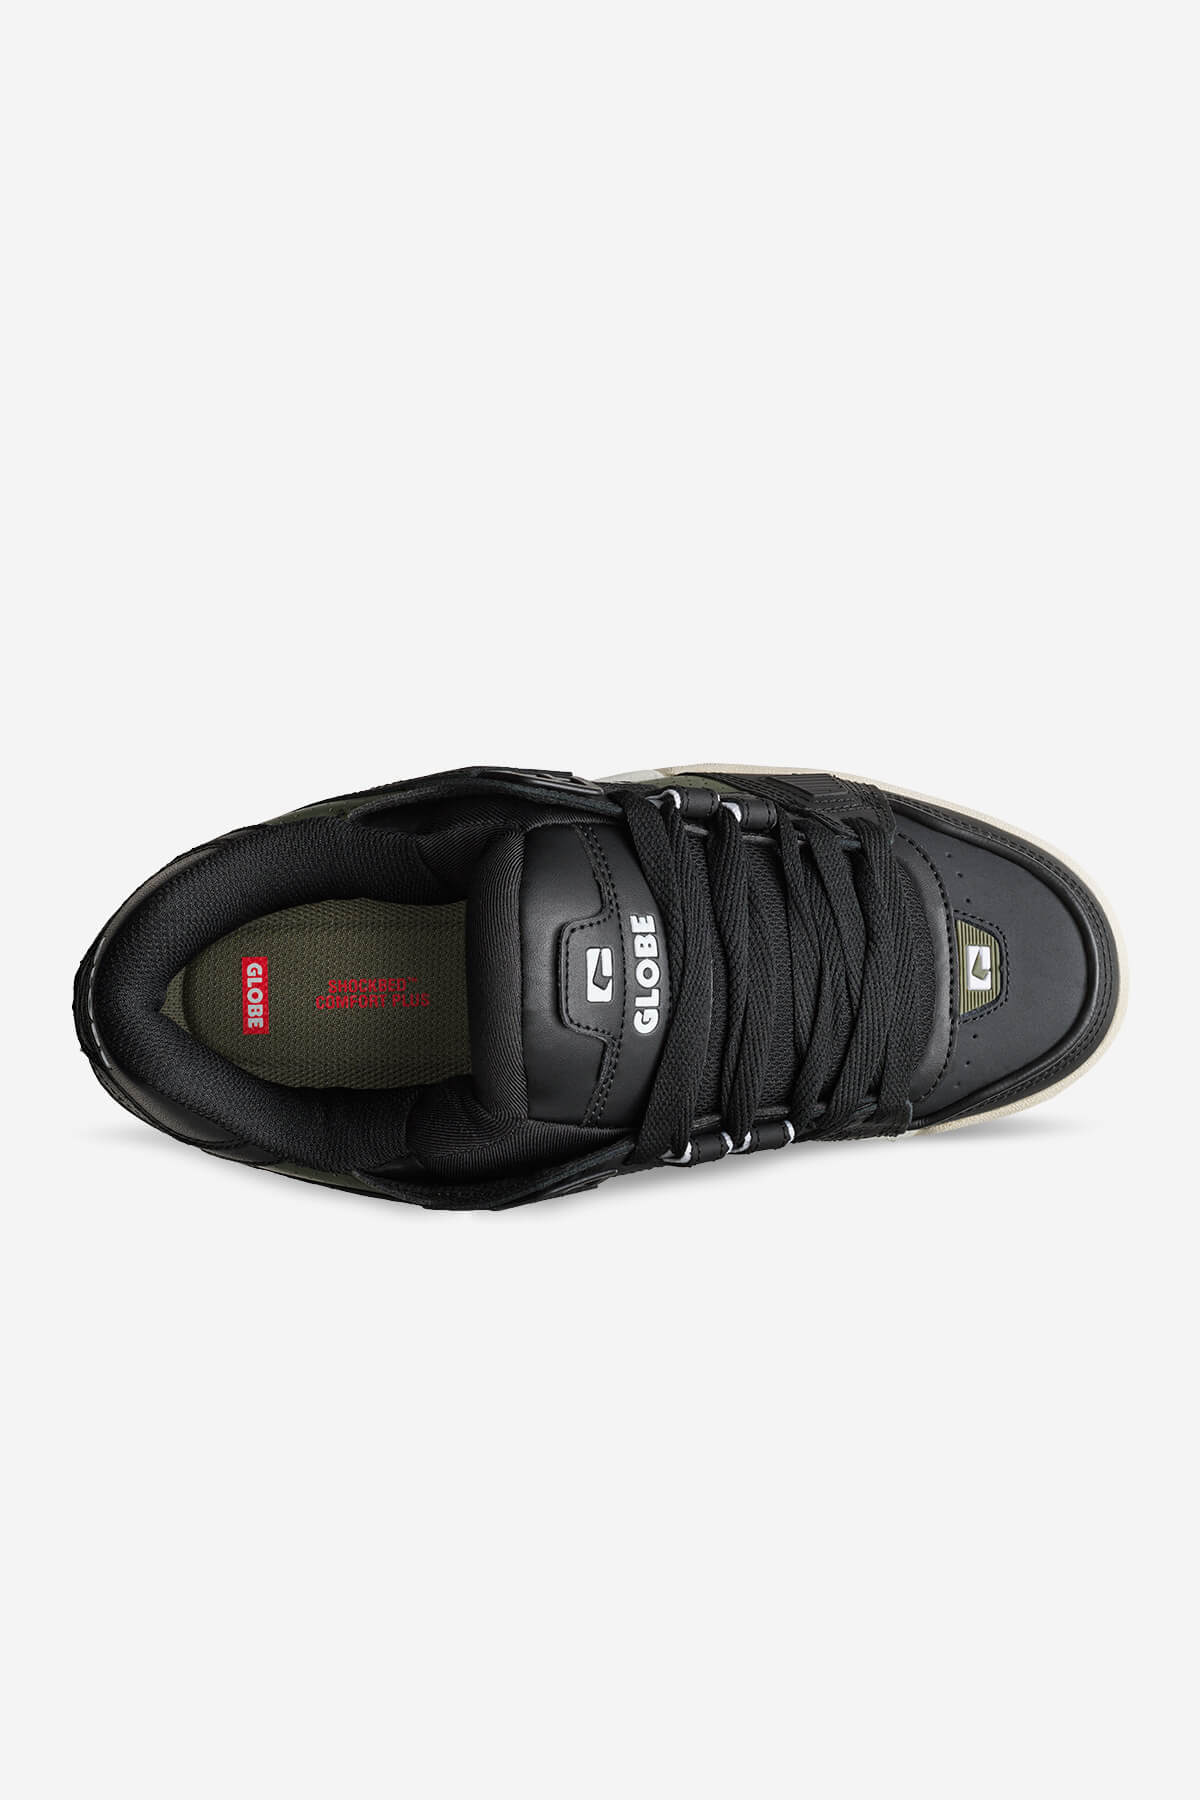 Globe - Sabre - Schwarz/Kombi - skateboard Schuhe